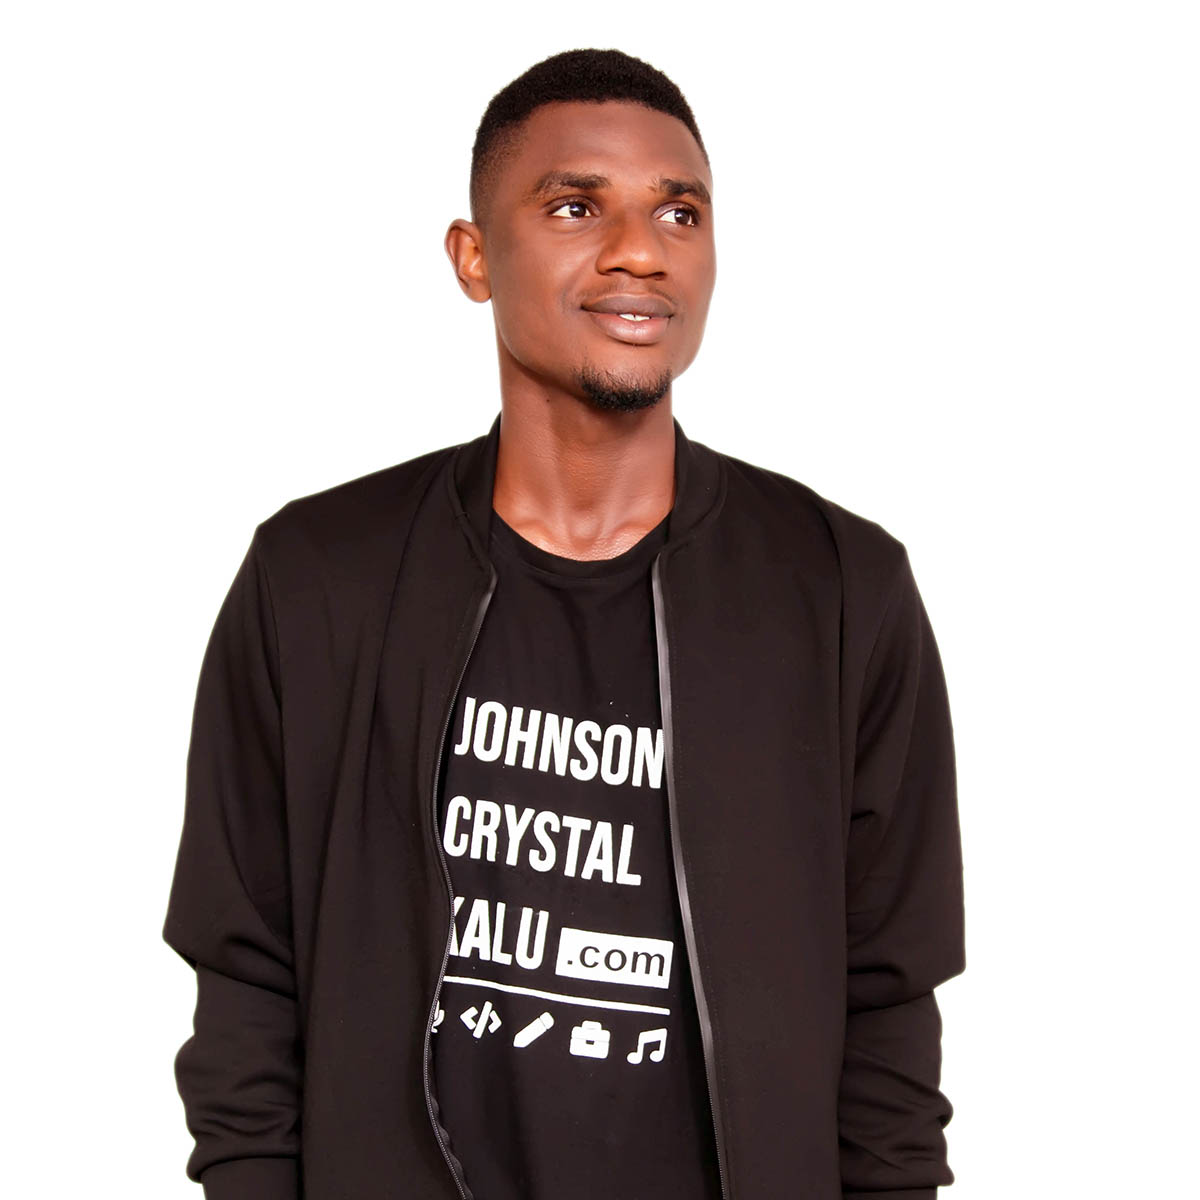 Johnson Crystal Kalu